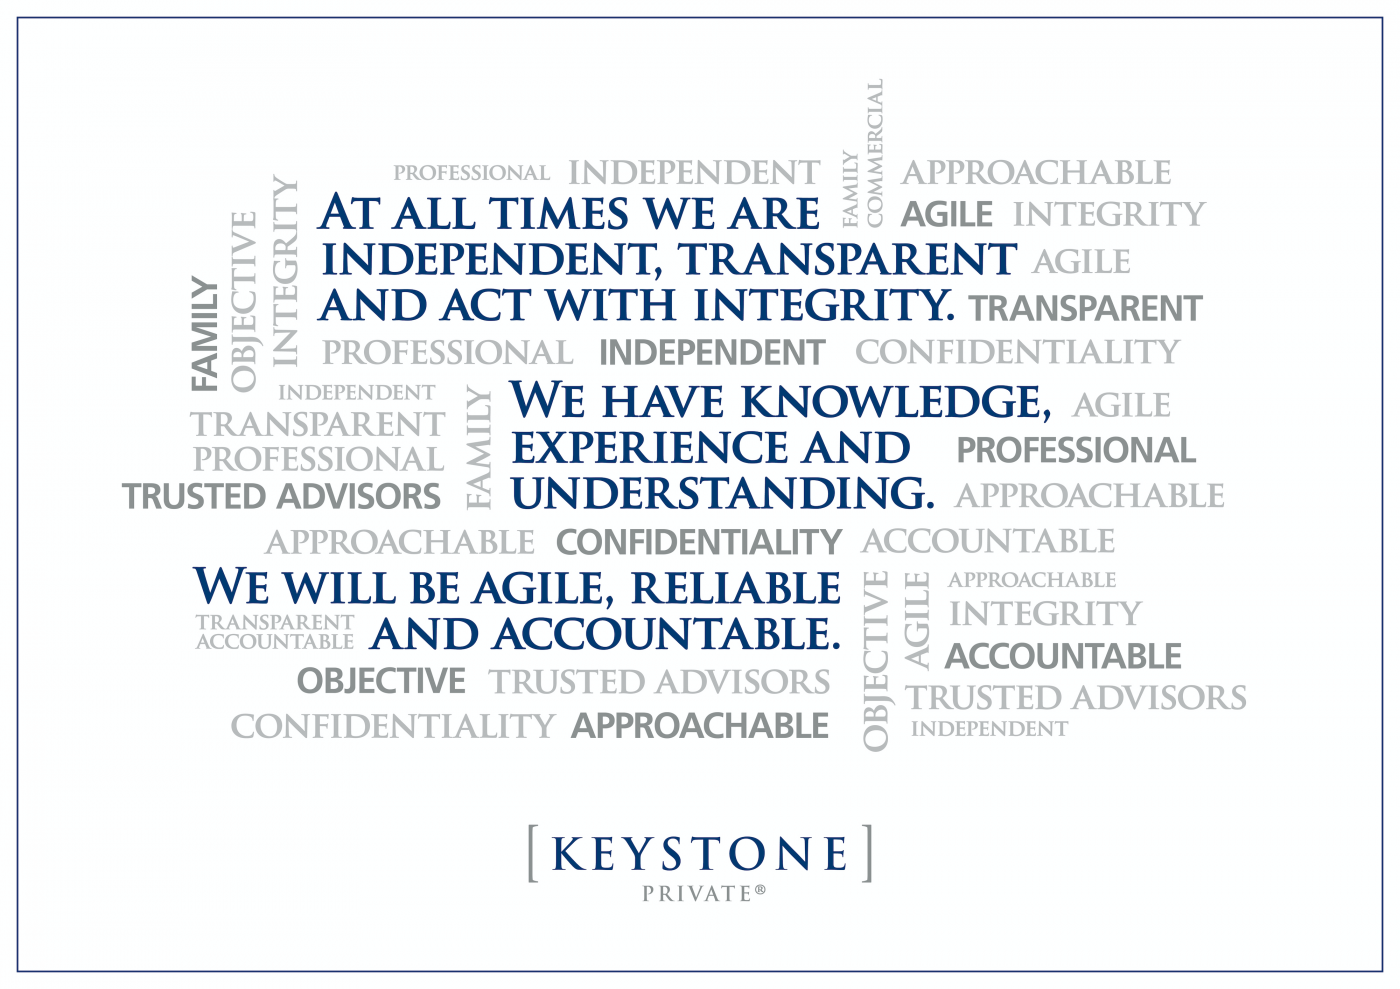 Keystone Private Values